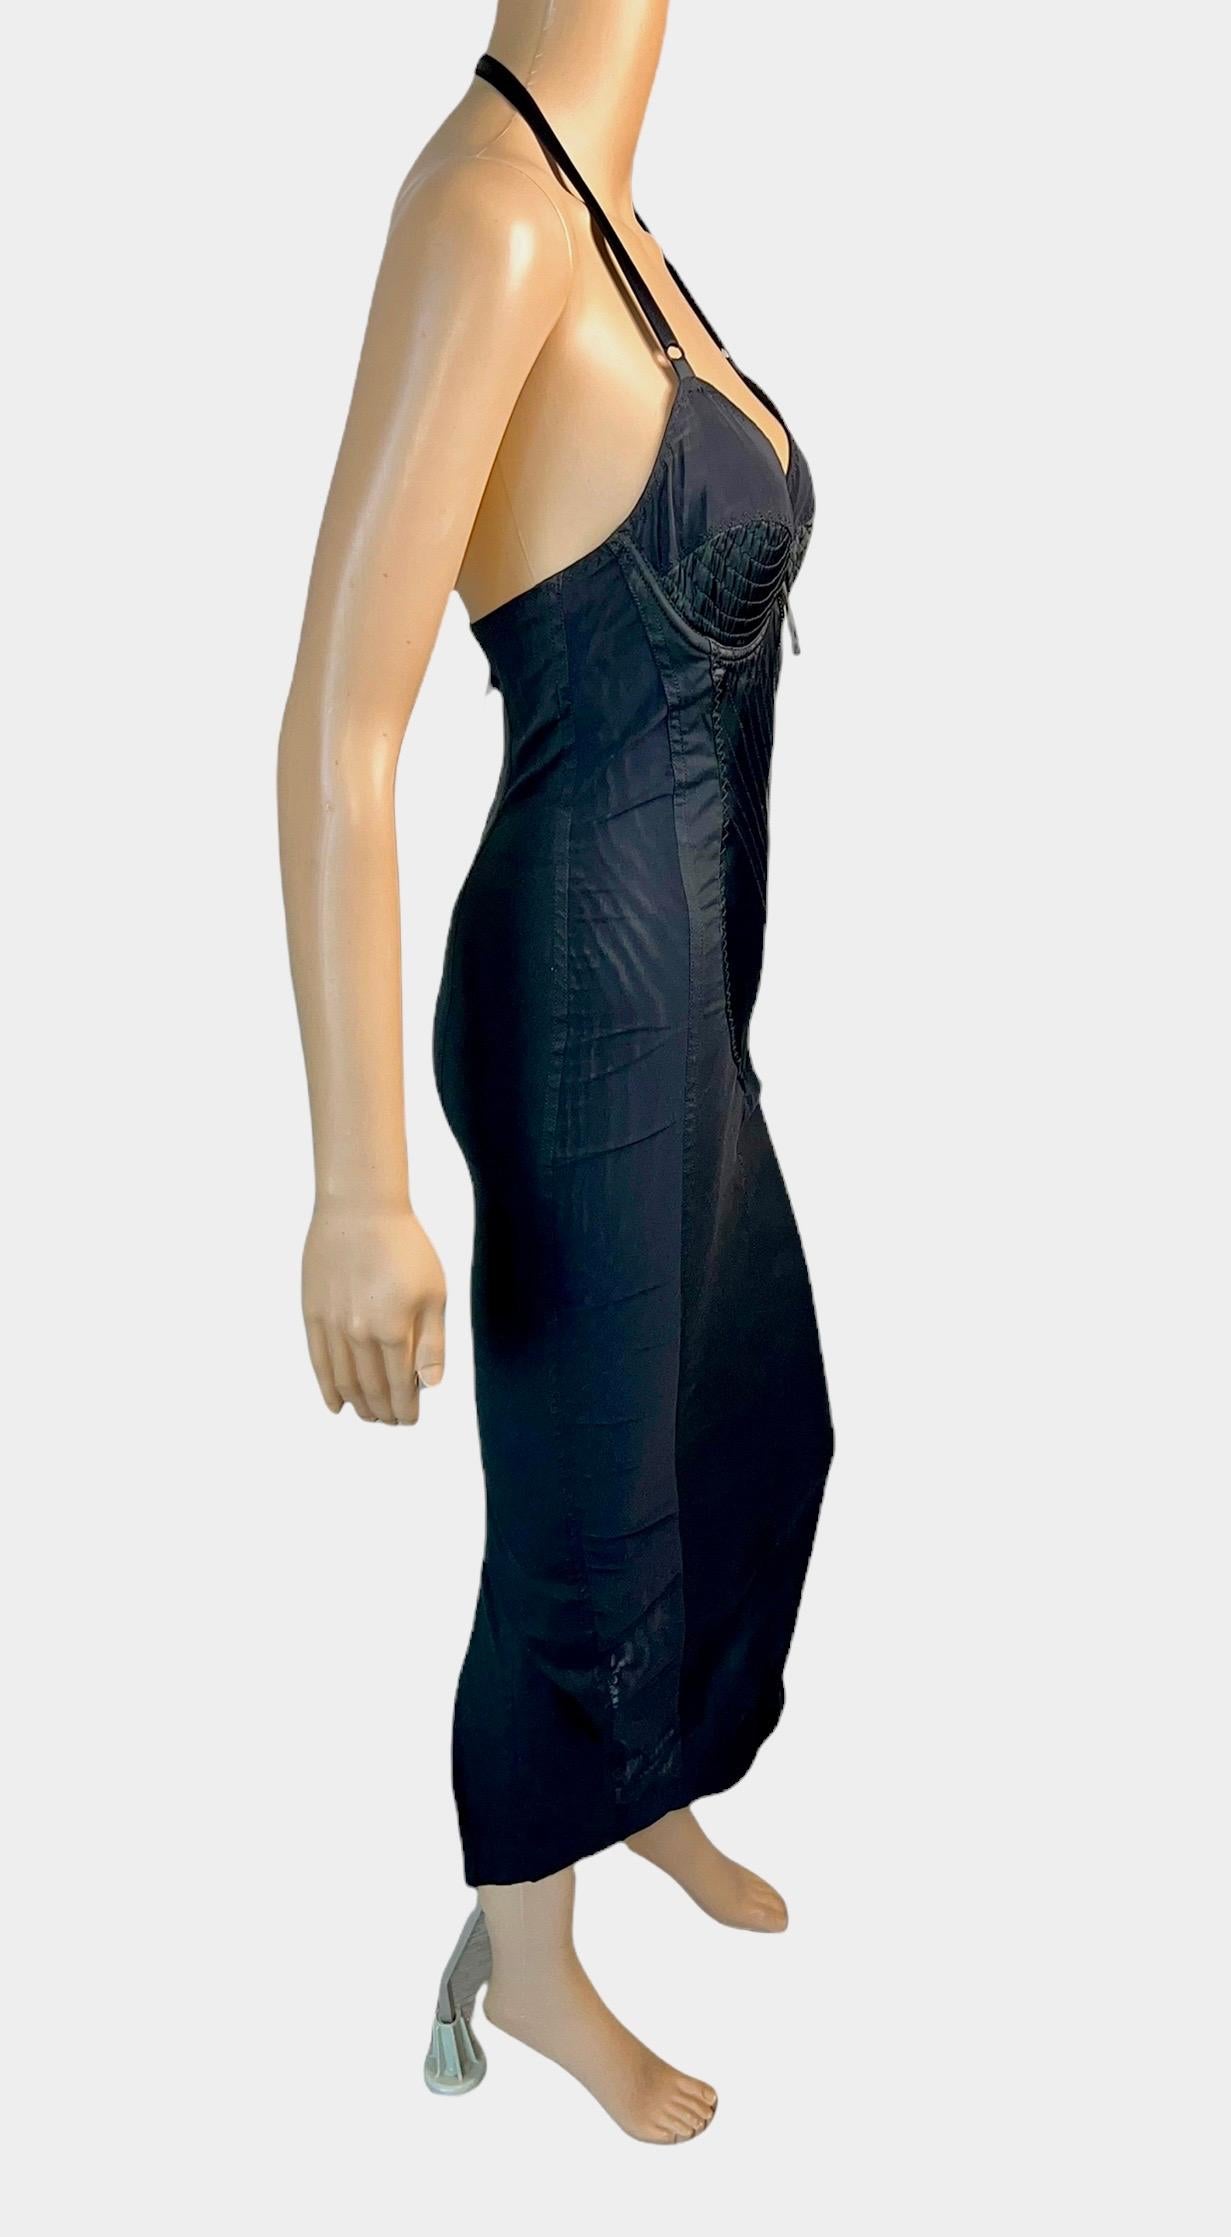 Jean Paul Gaultier 1990's Vintage Cone Bra Corset Bondage Black Evening Dress 1